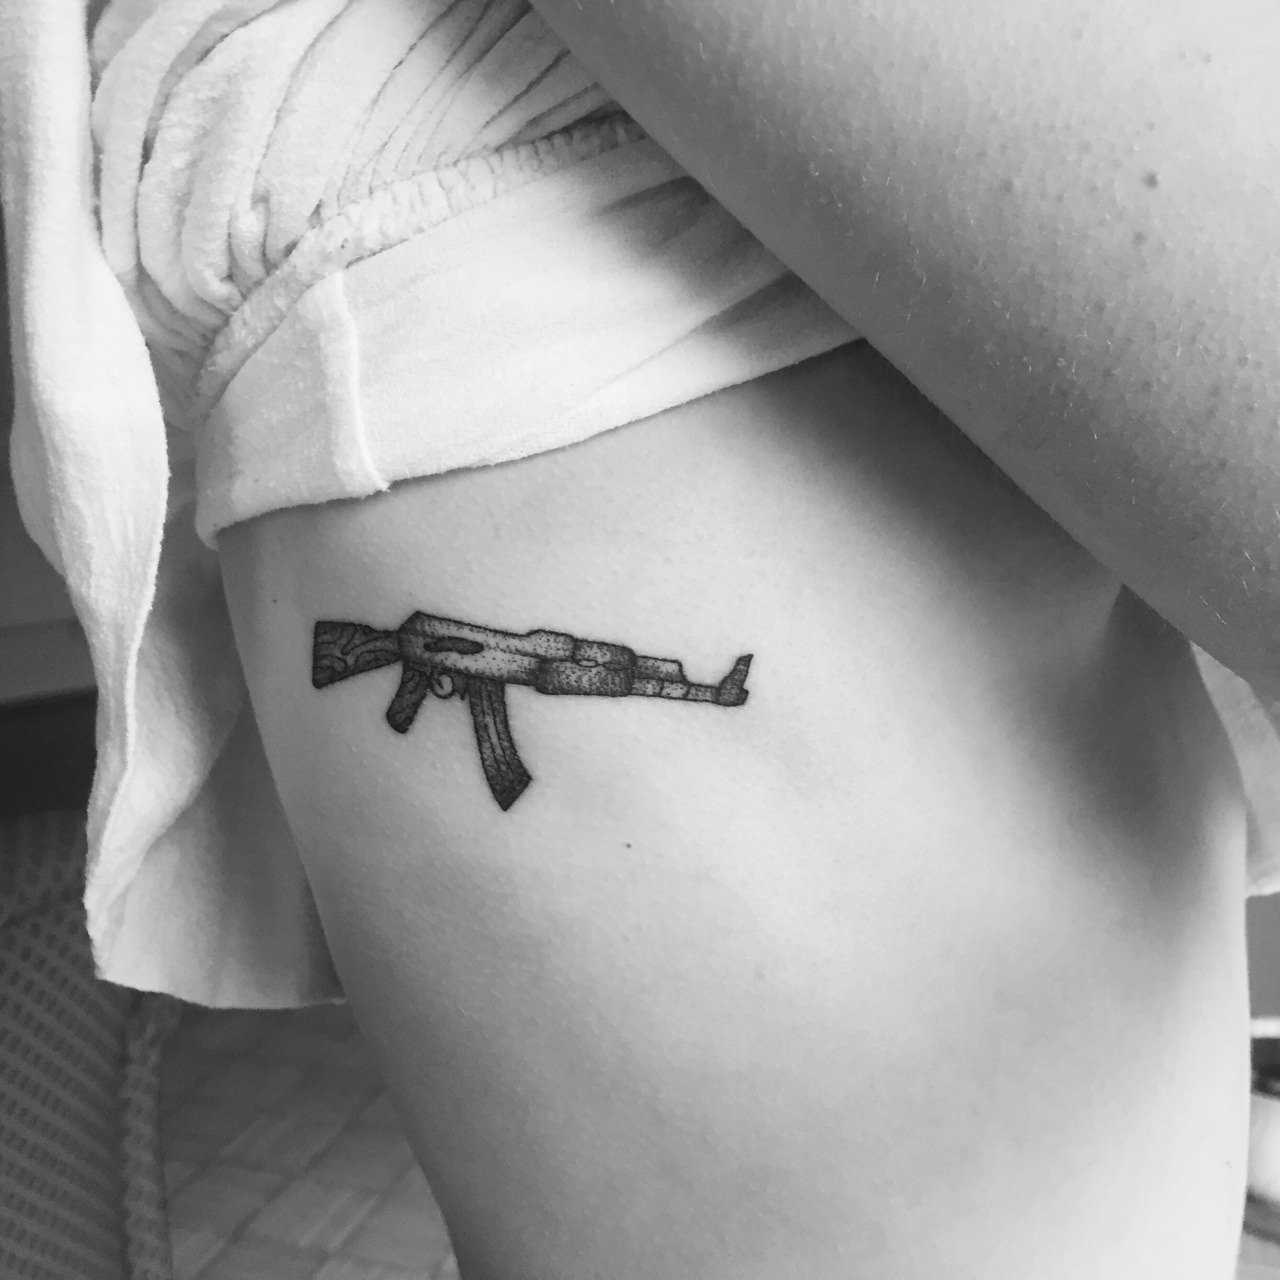 Ak47 gun tattoo 💖 Фото рисунка Татуировки АК-47 29.10.2018 №